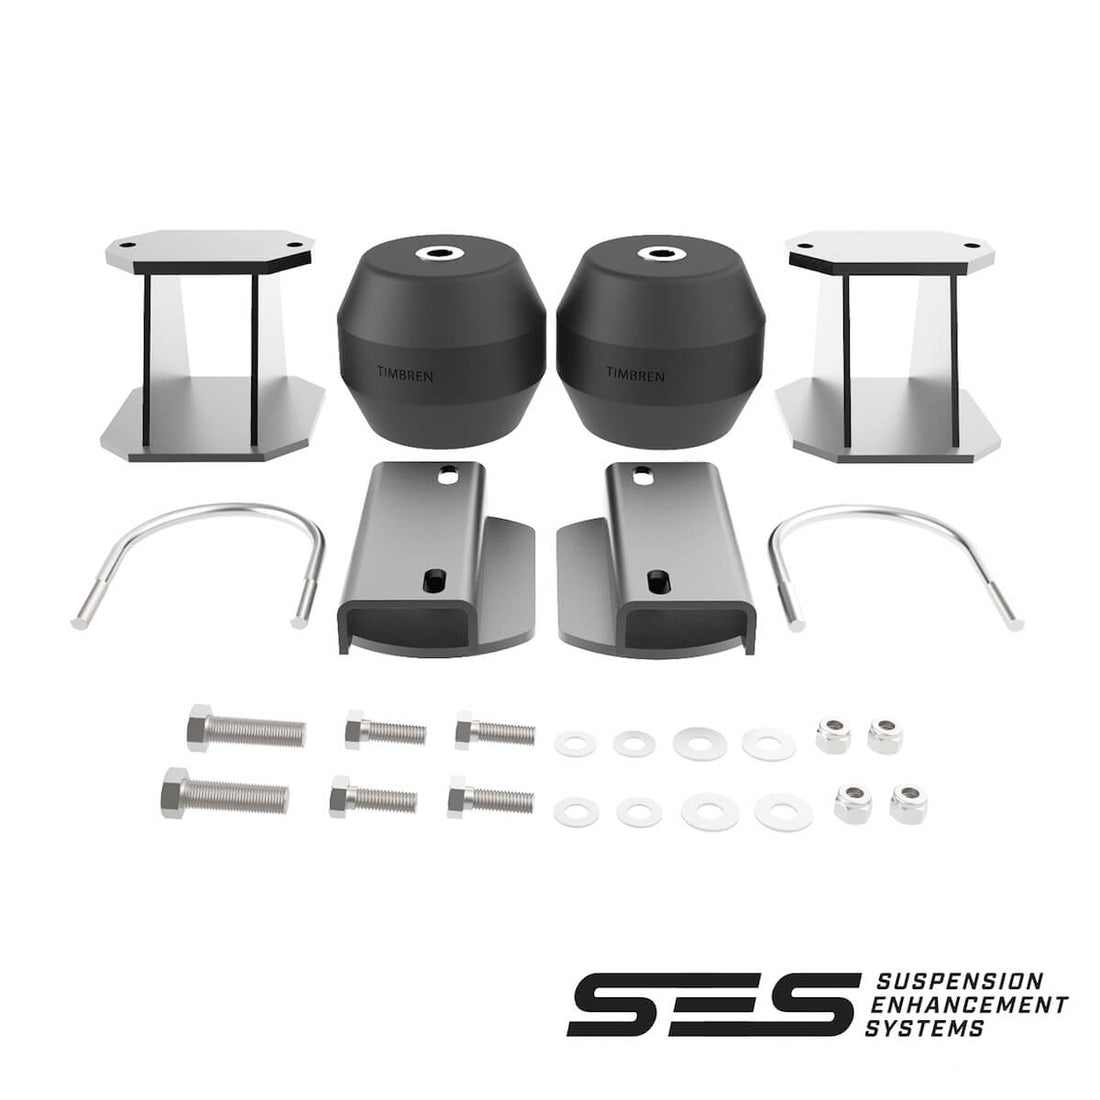 Timbren SES Suspension Enhancement System SKU# DRTT3500 - Rear Severe Service Kit